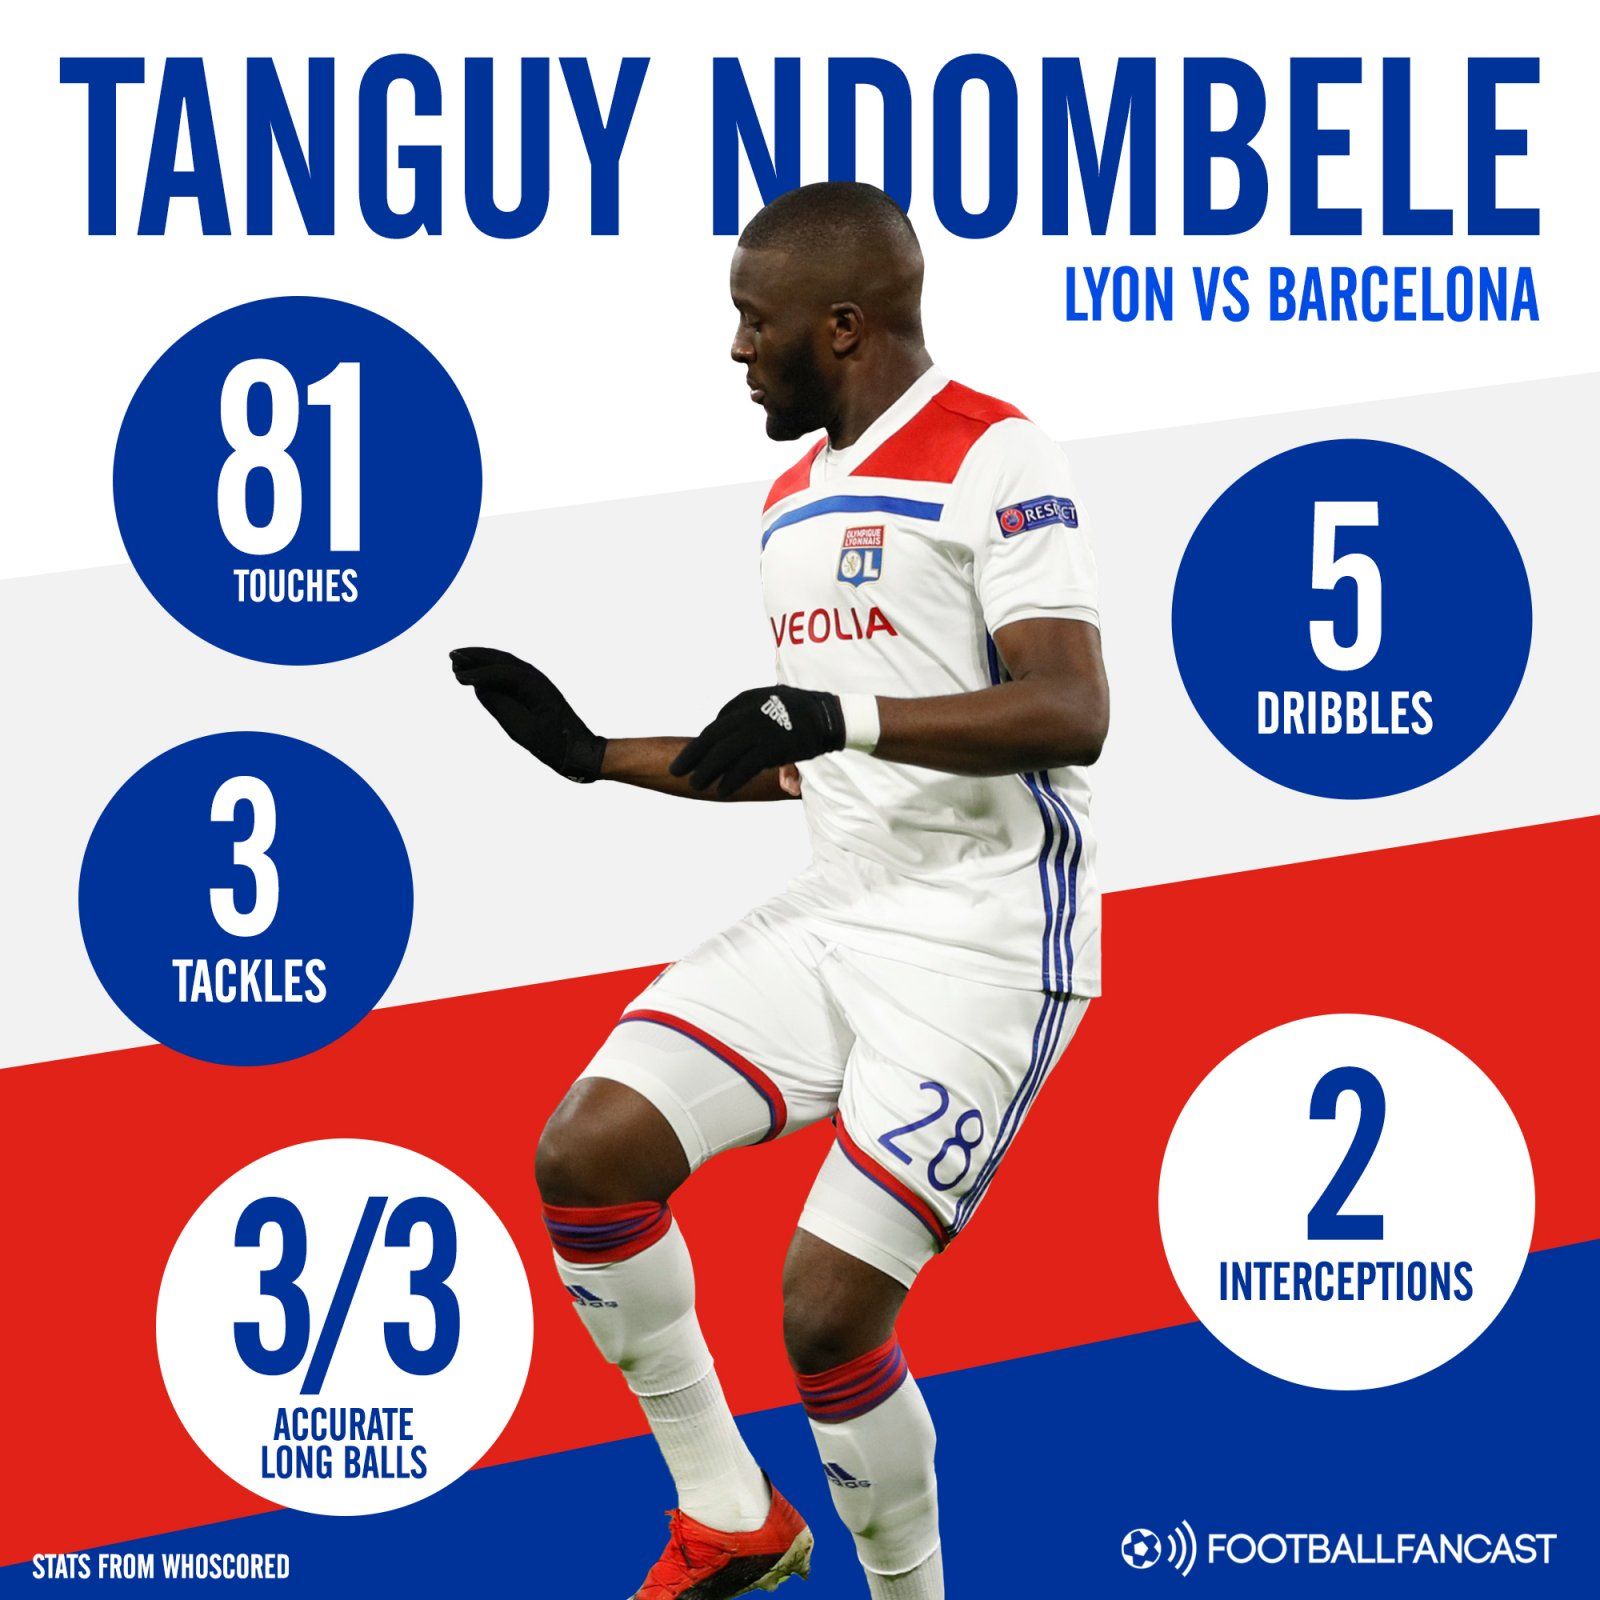 Lyon midfielder Tanguy Ndombele's stats vs Barcelona